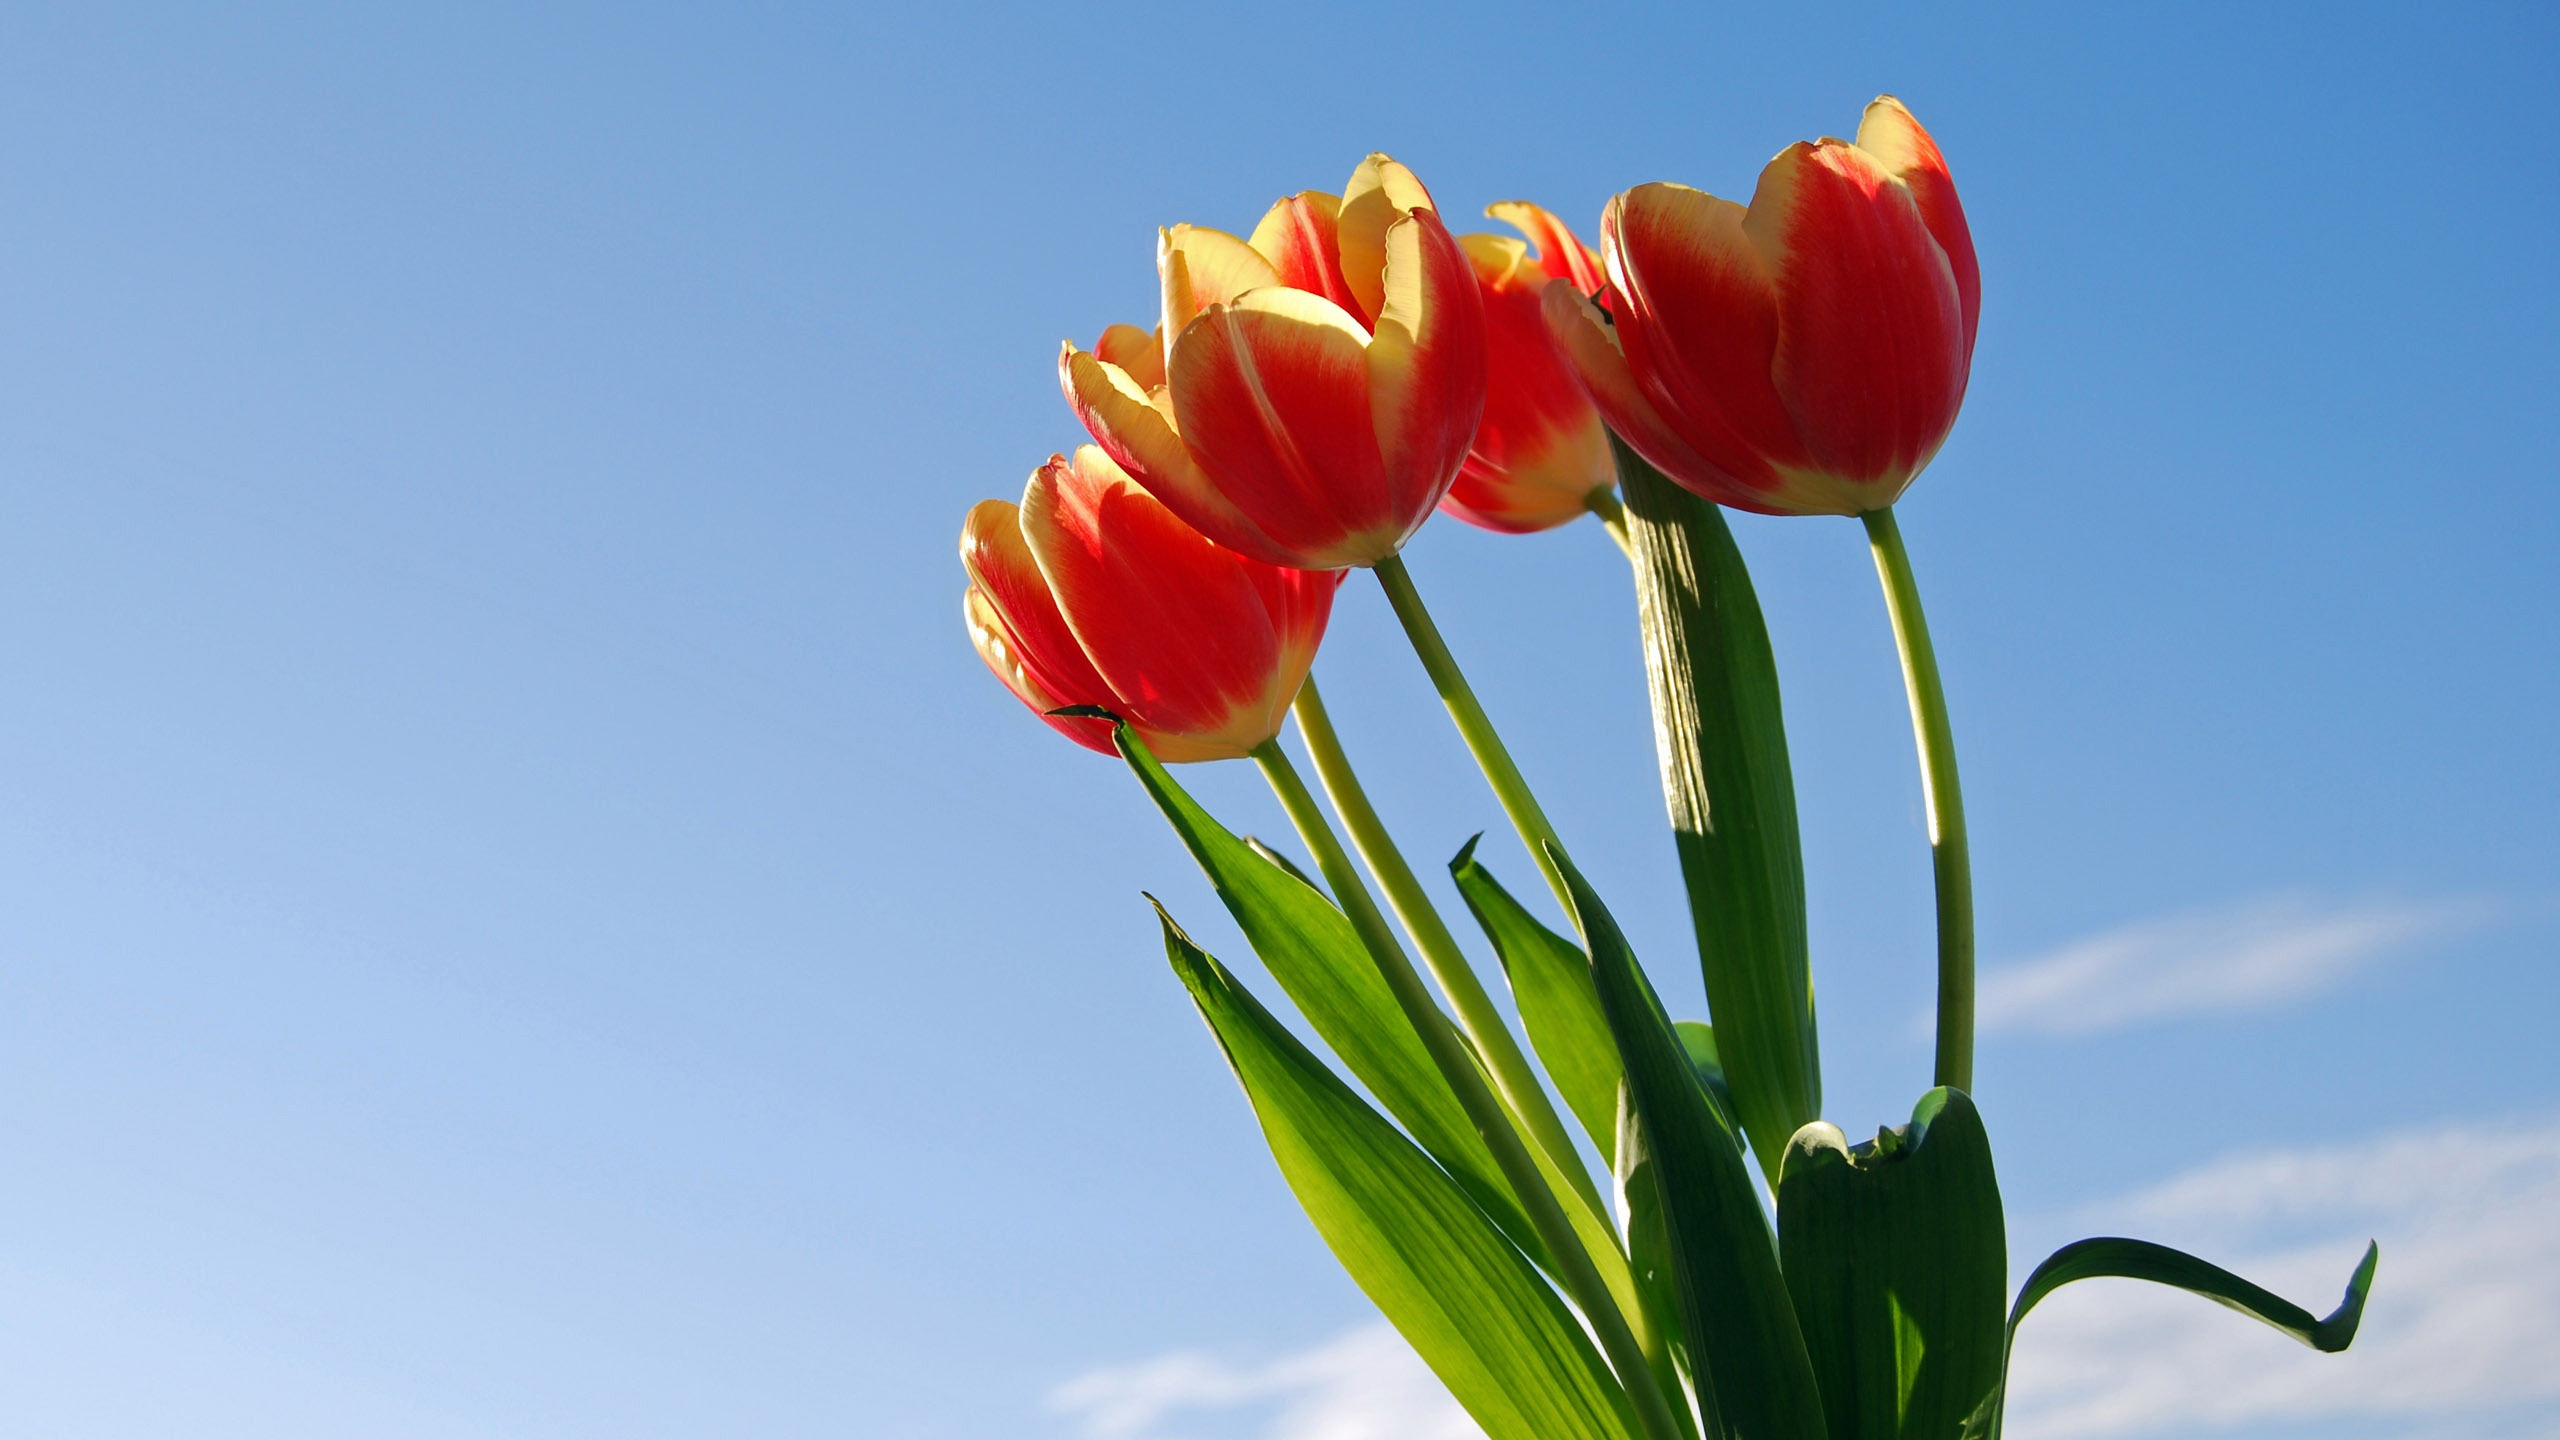 Sun Tulips for 2560x1440 HDTV resolution